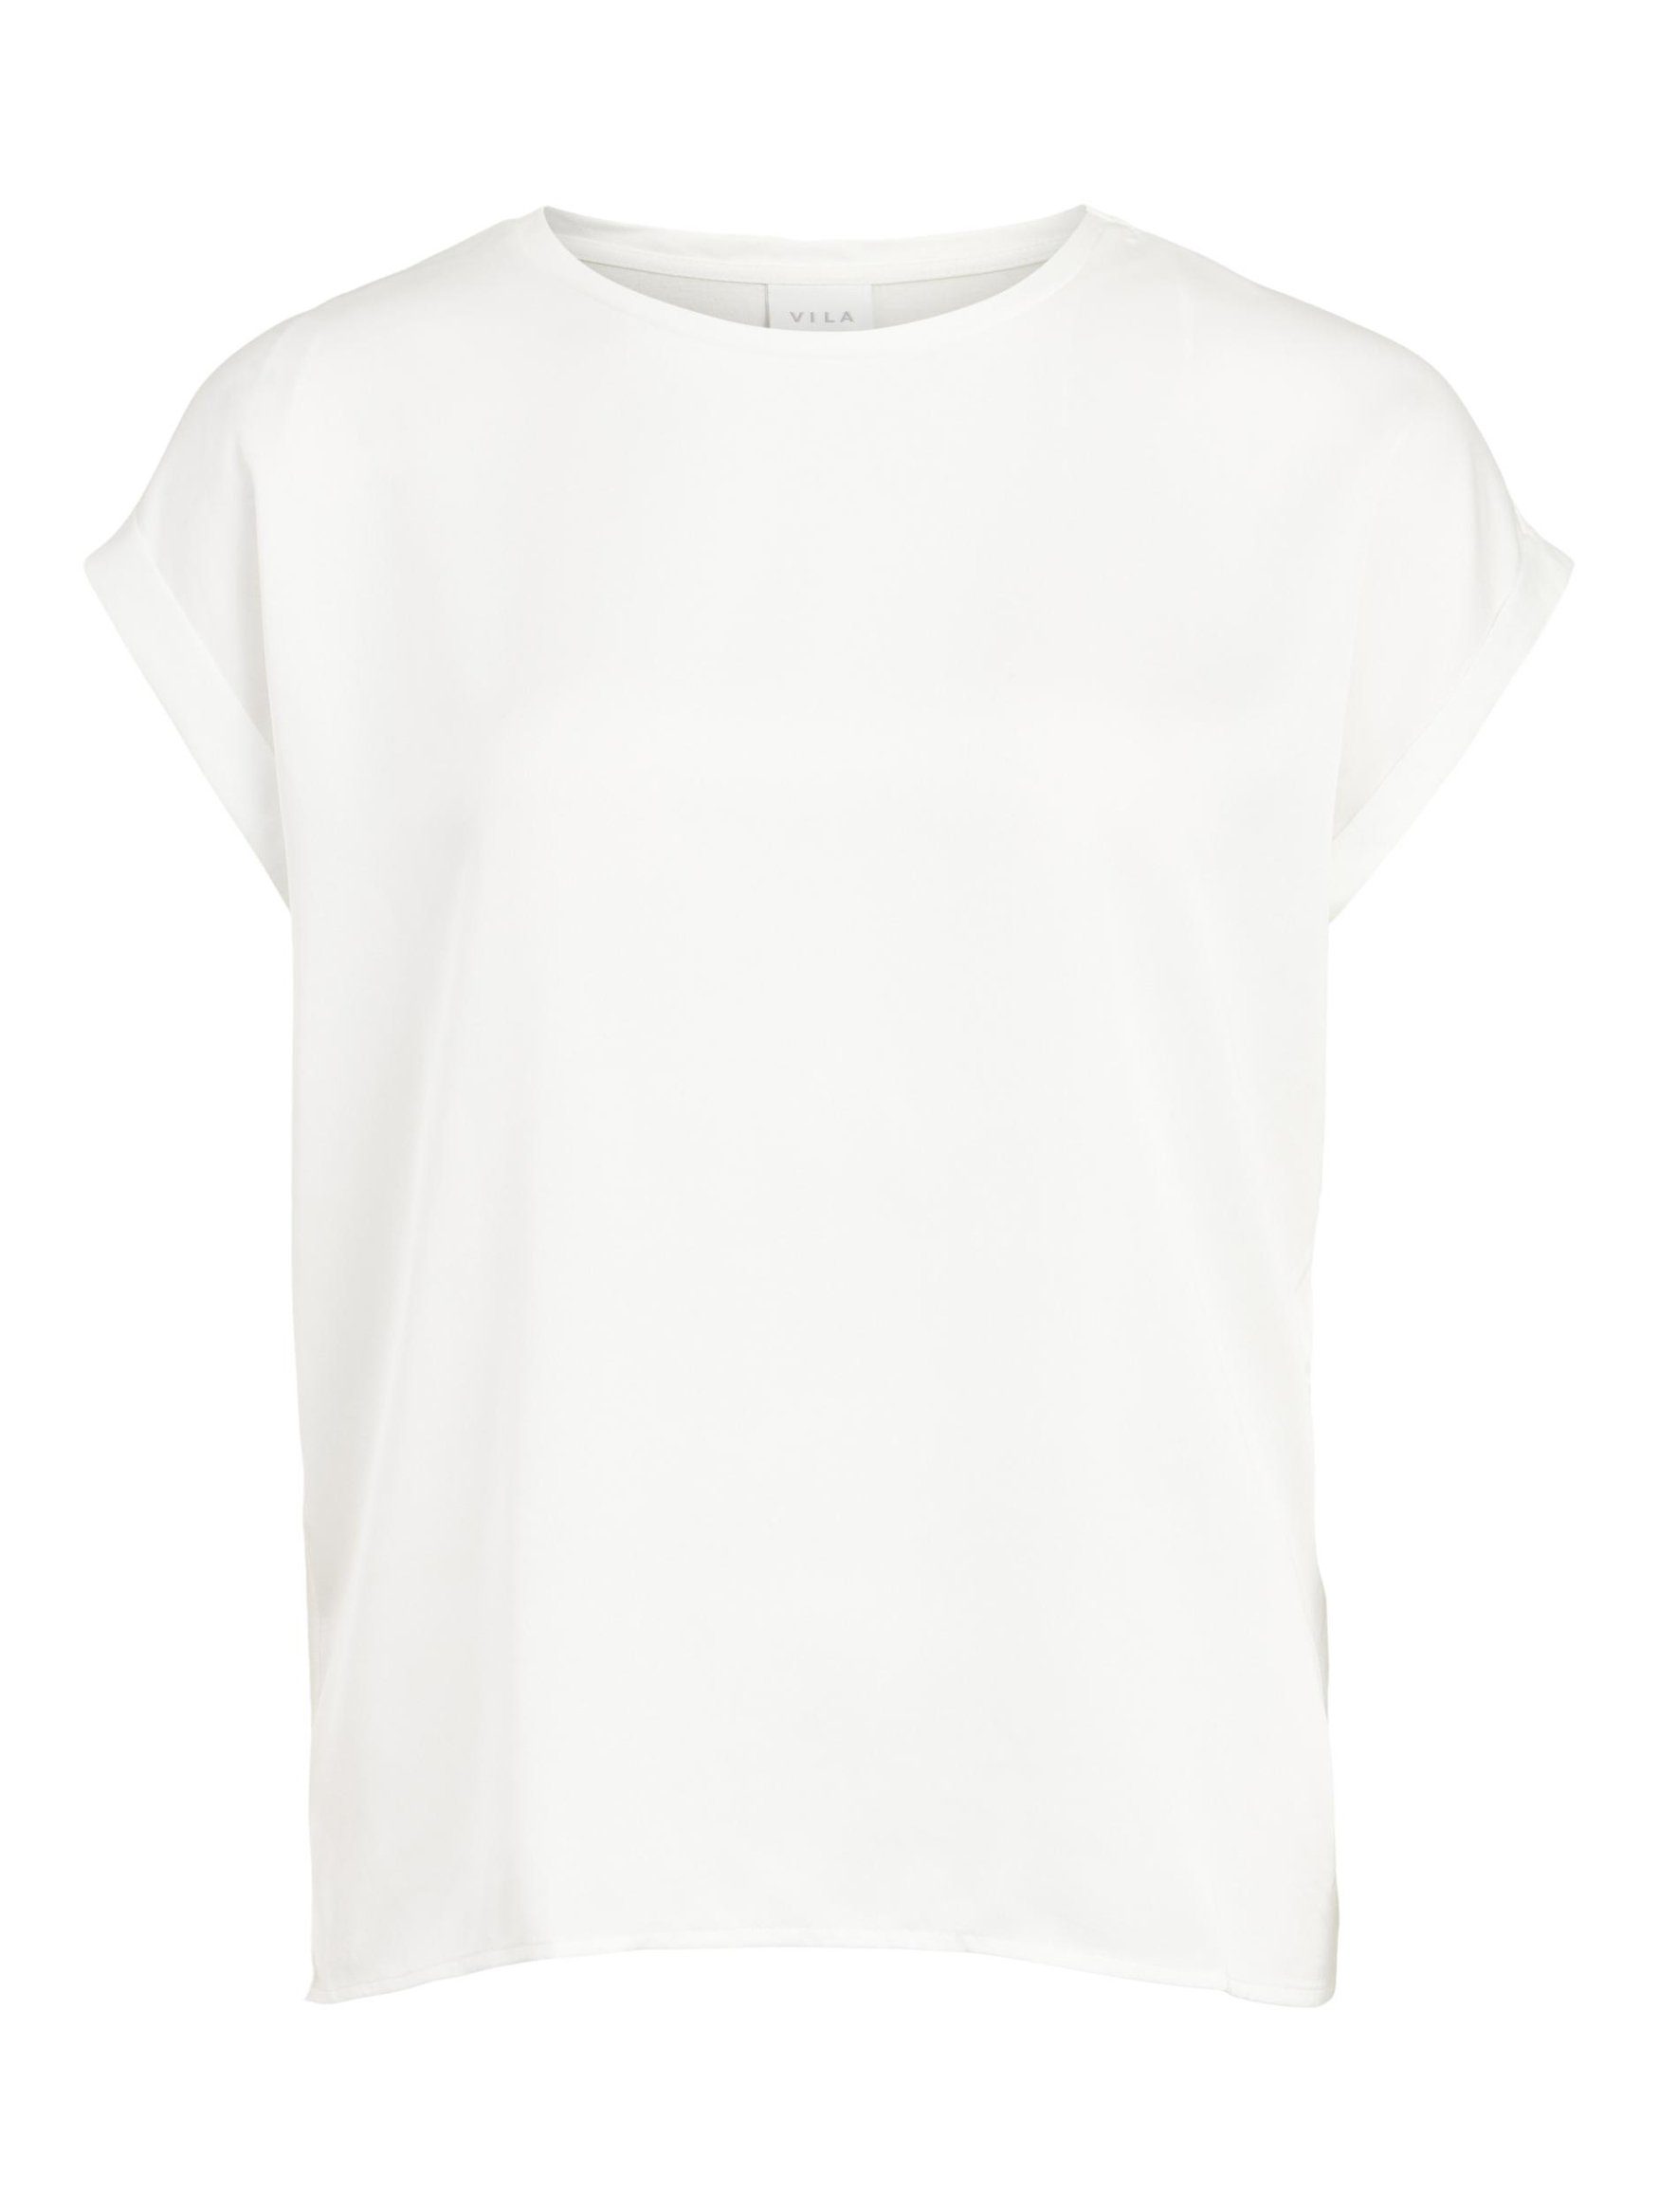 Vila T-Shirt Satain Blusen T-Shirt Kurzarm Basic Top Glänzend VIELLETTE 4599 in Weiß